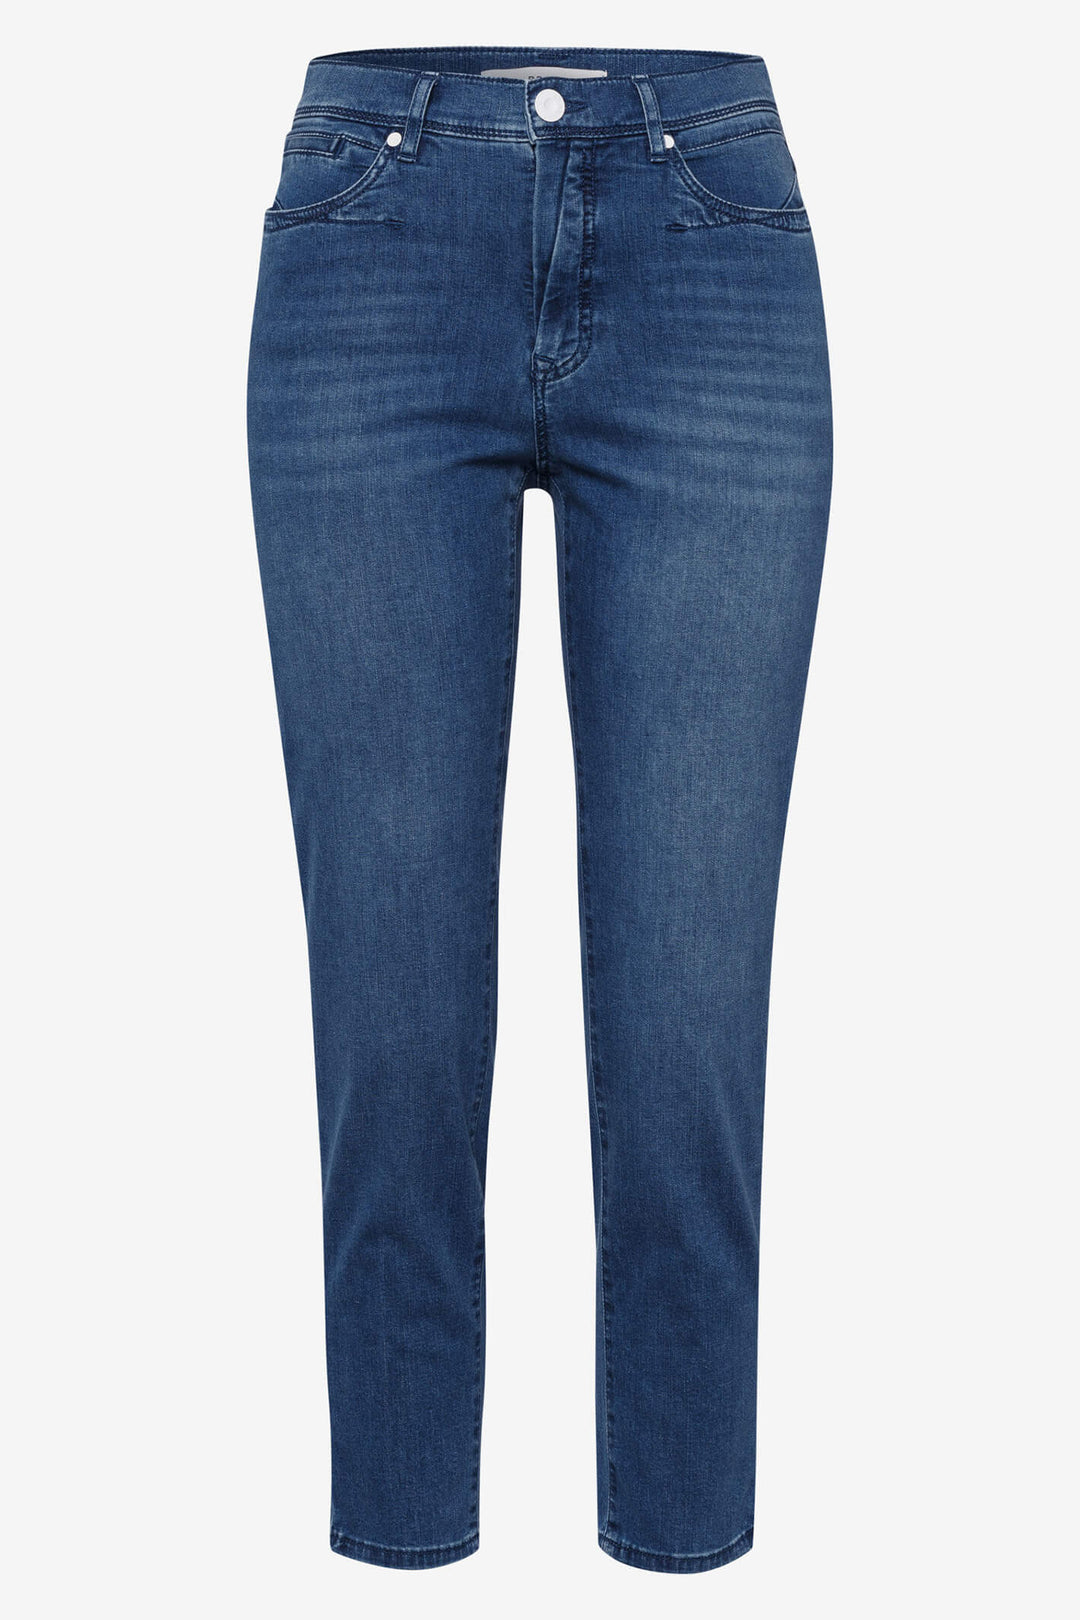 Brax Mary S 71-7558-25 Used Regular Blue Denim Jeans - Olivia Grace Fashion